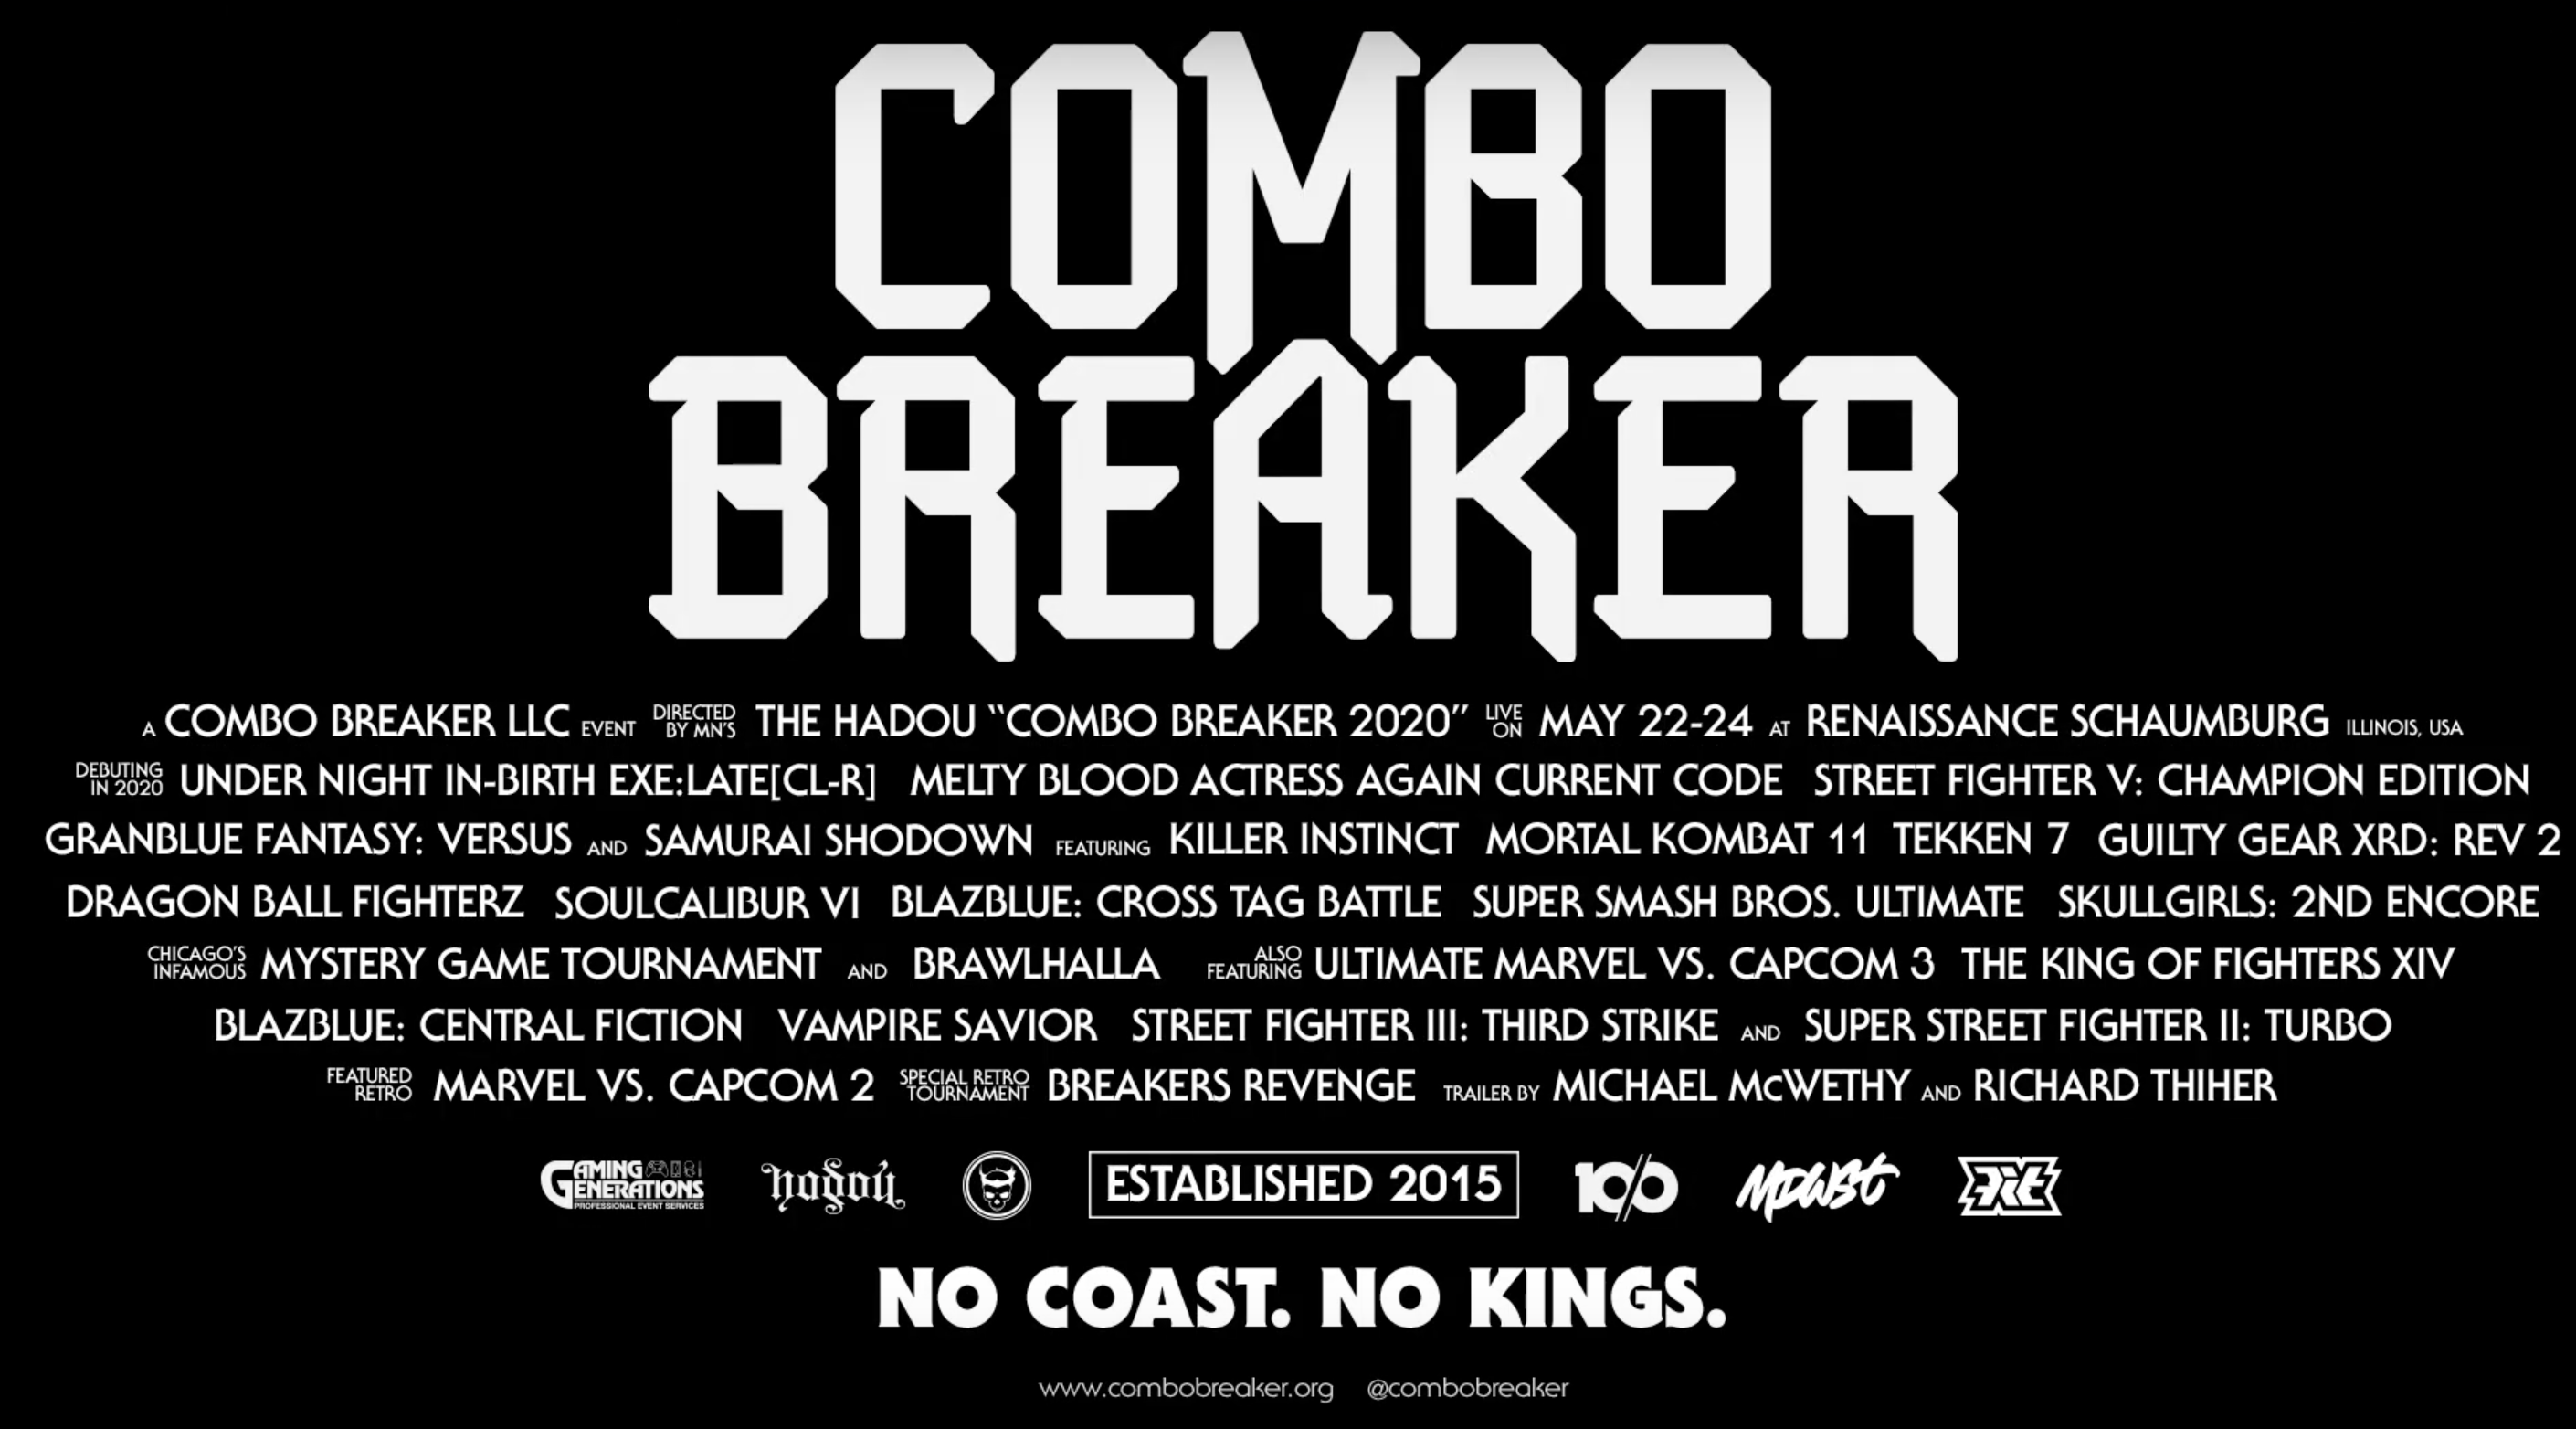 Combo Breaker 2020 Dates, Venue Announced - Hotspawn.com